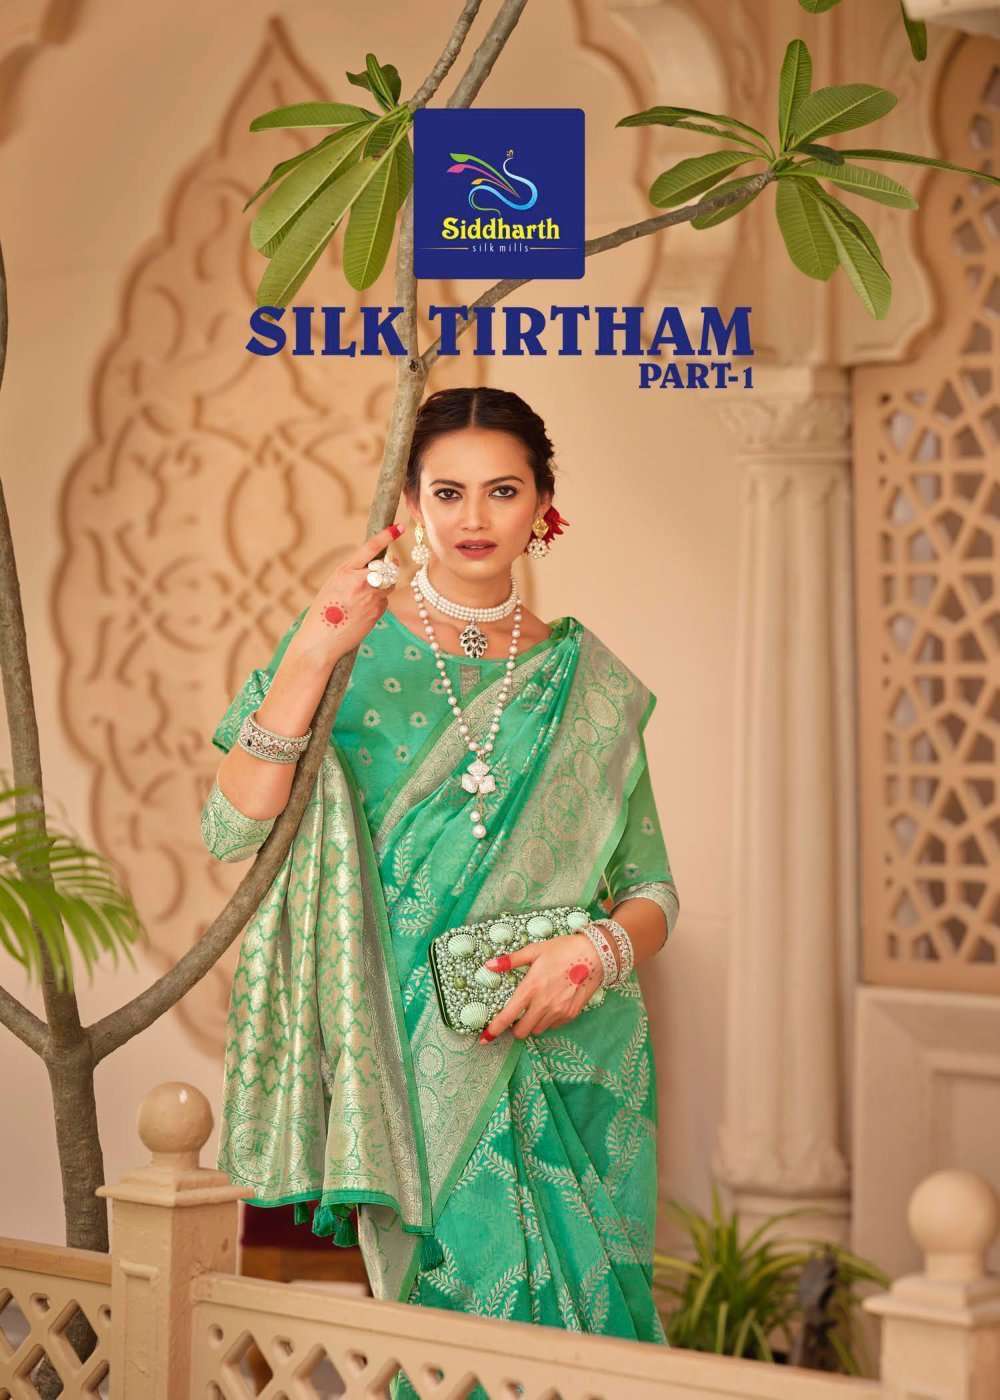 siddharth silk mills silk tirtham series 7101-7106 silk base saree